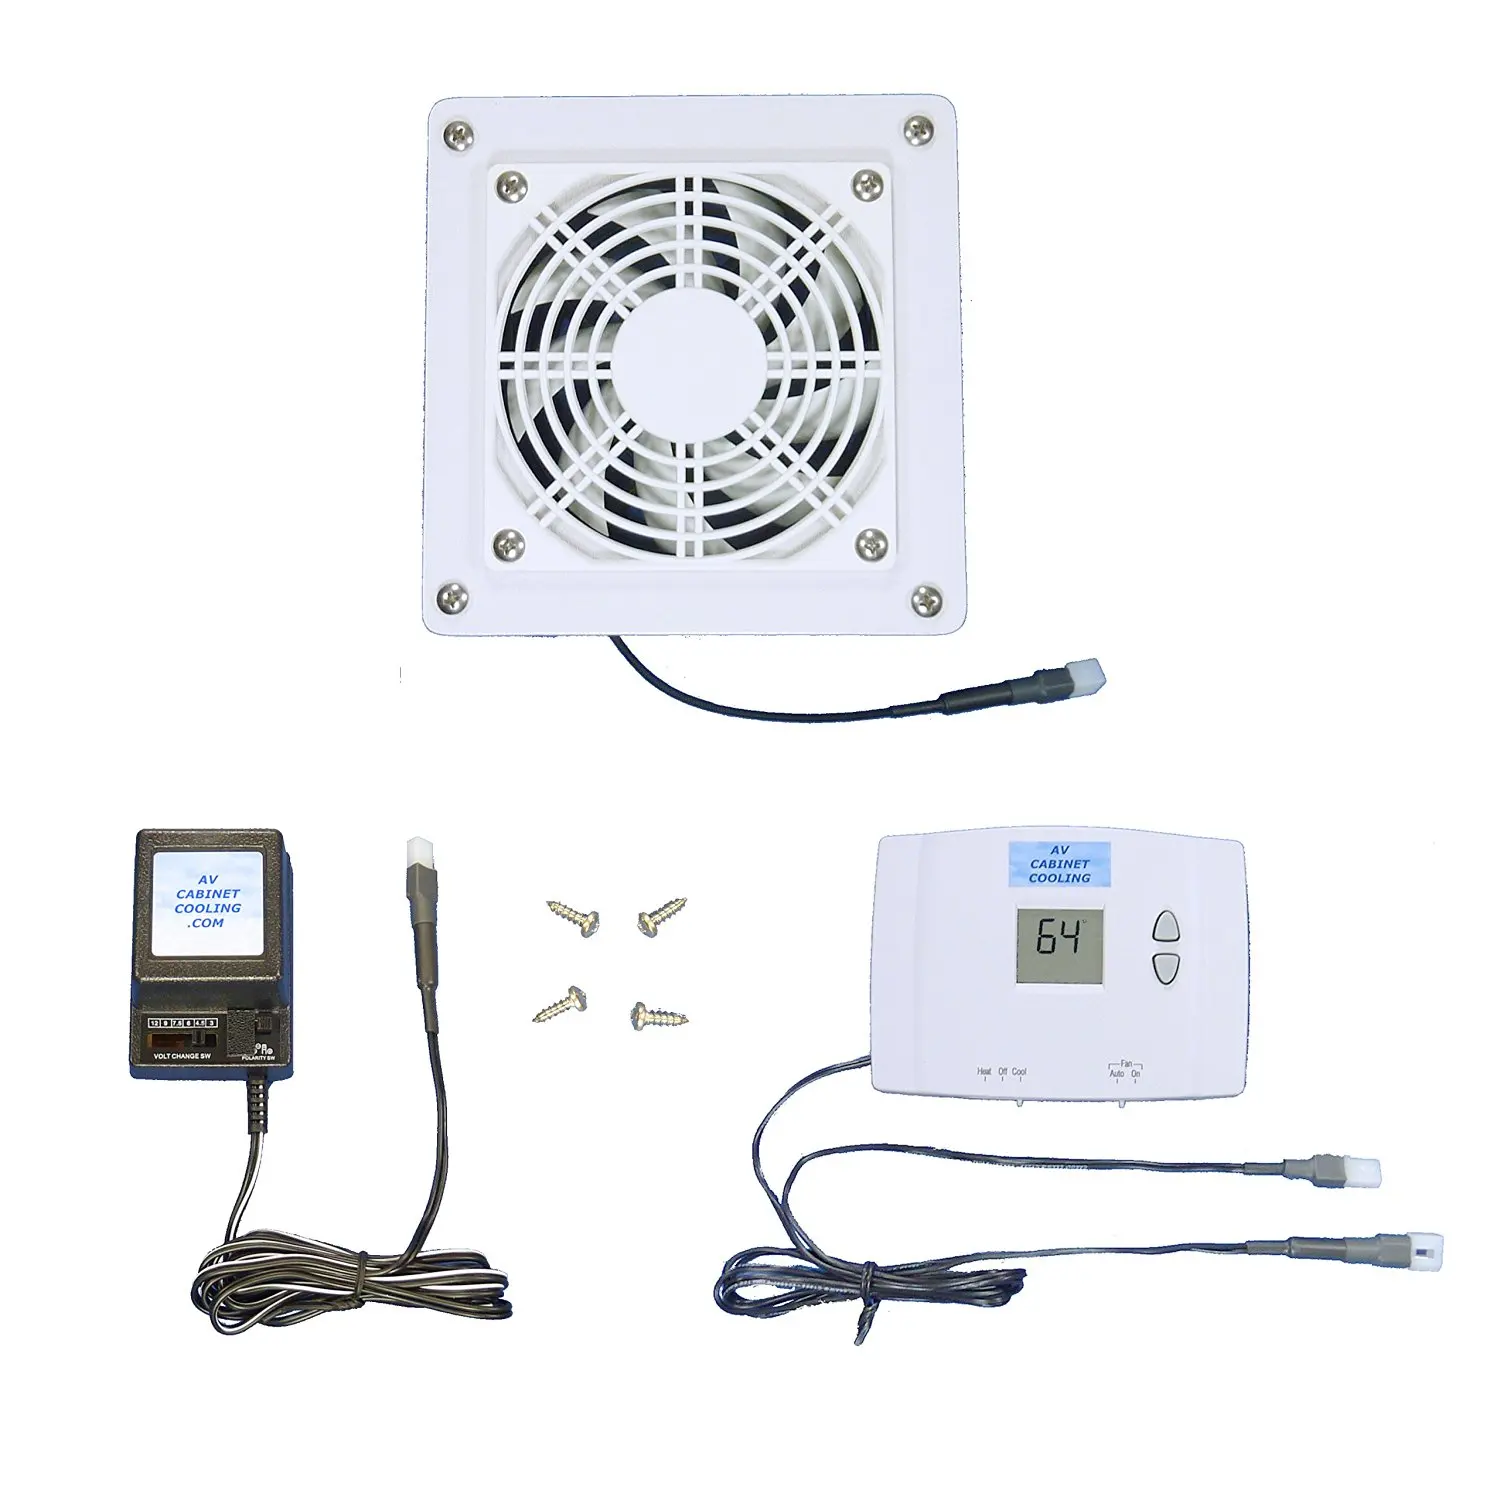 Buy Mega-fan 4-Zone AV Cabinet Digital Thermostat-controlled multispeed